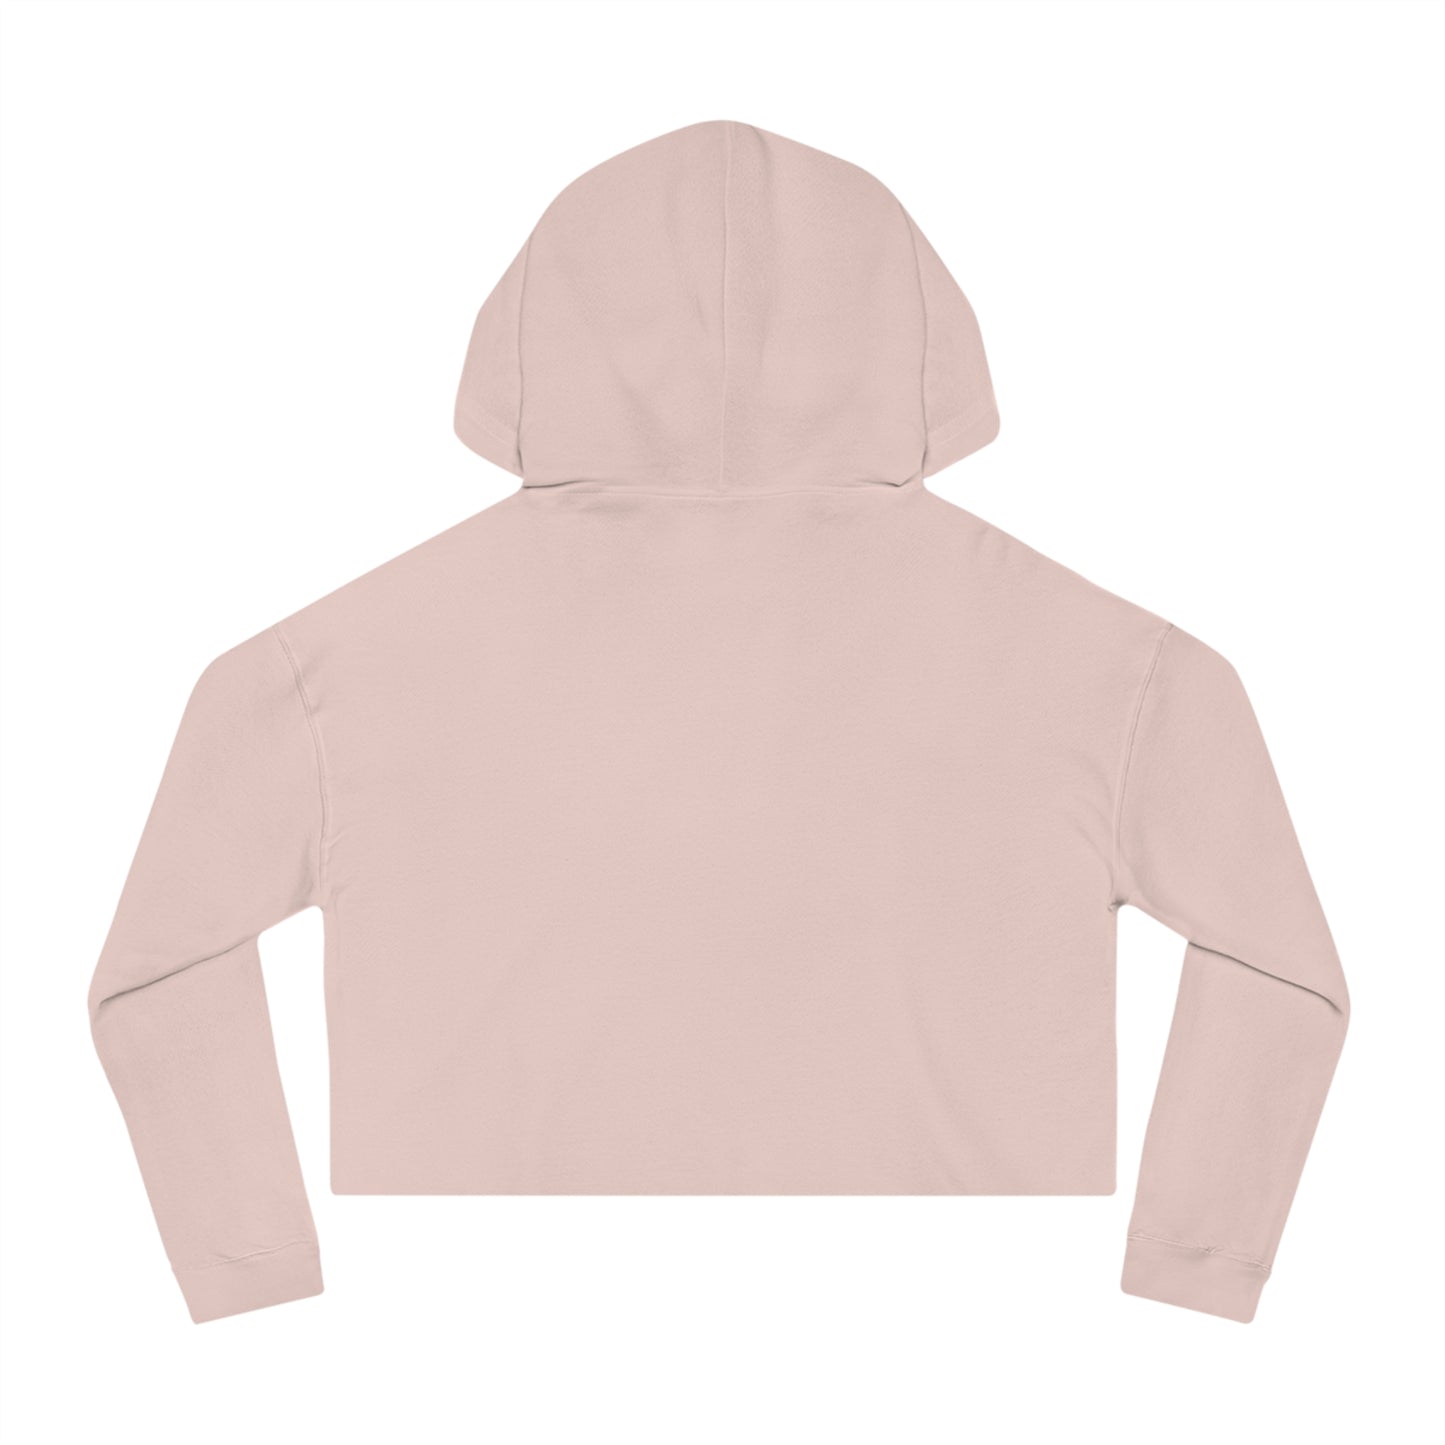 BTG Women’s Cropped Hooded Sweatshirt